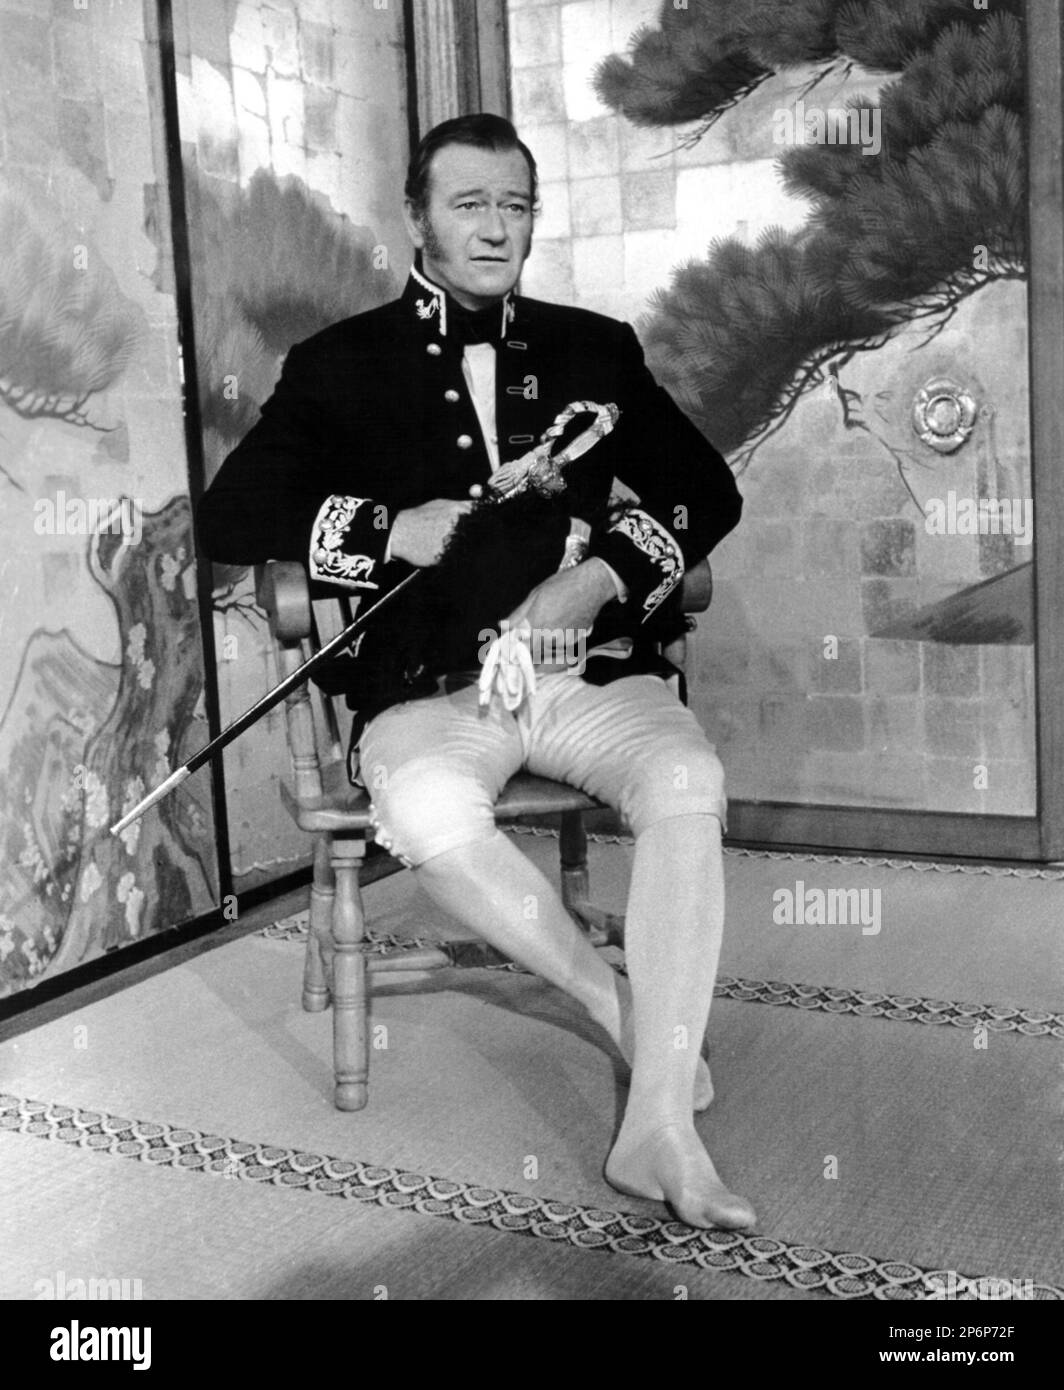 1958: The  celebrated movie actor  JOHN WAYNE  in a pubblicitary shot for THE BARBARIAN AND THE GEISHA ( Il barbaro e la geisha ) by John Huston , from a novel by Ellis St. Joseph   - CINEMA - ATTORE CINEMATOGRAFICO - FILM - spada - sword  - piedi scalzi - barefoot  ----  Archivio GBB Stock Photo